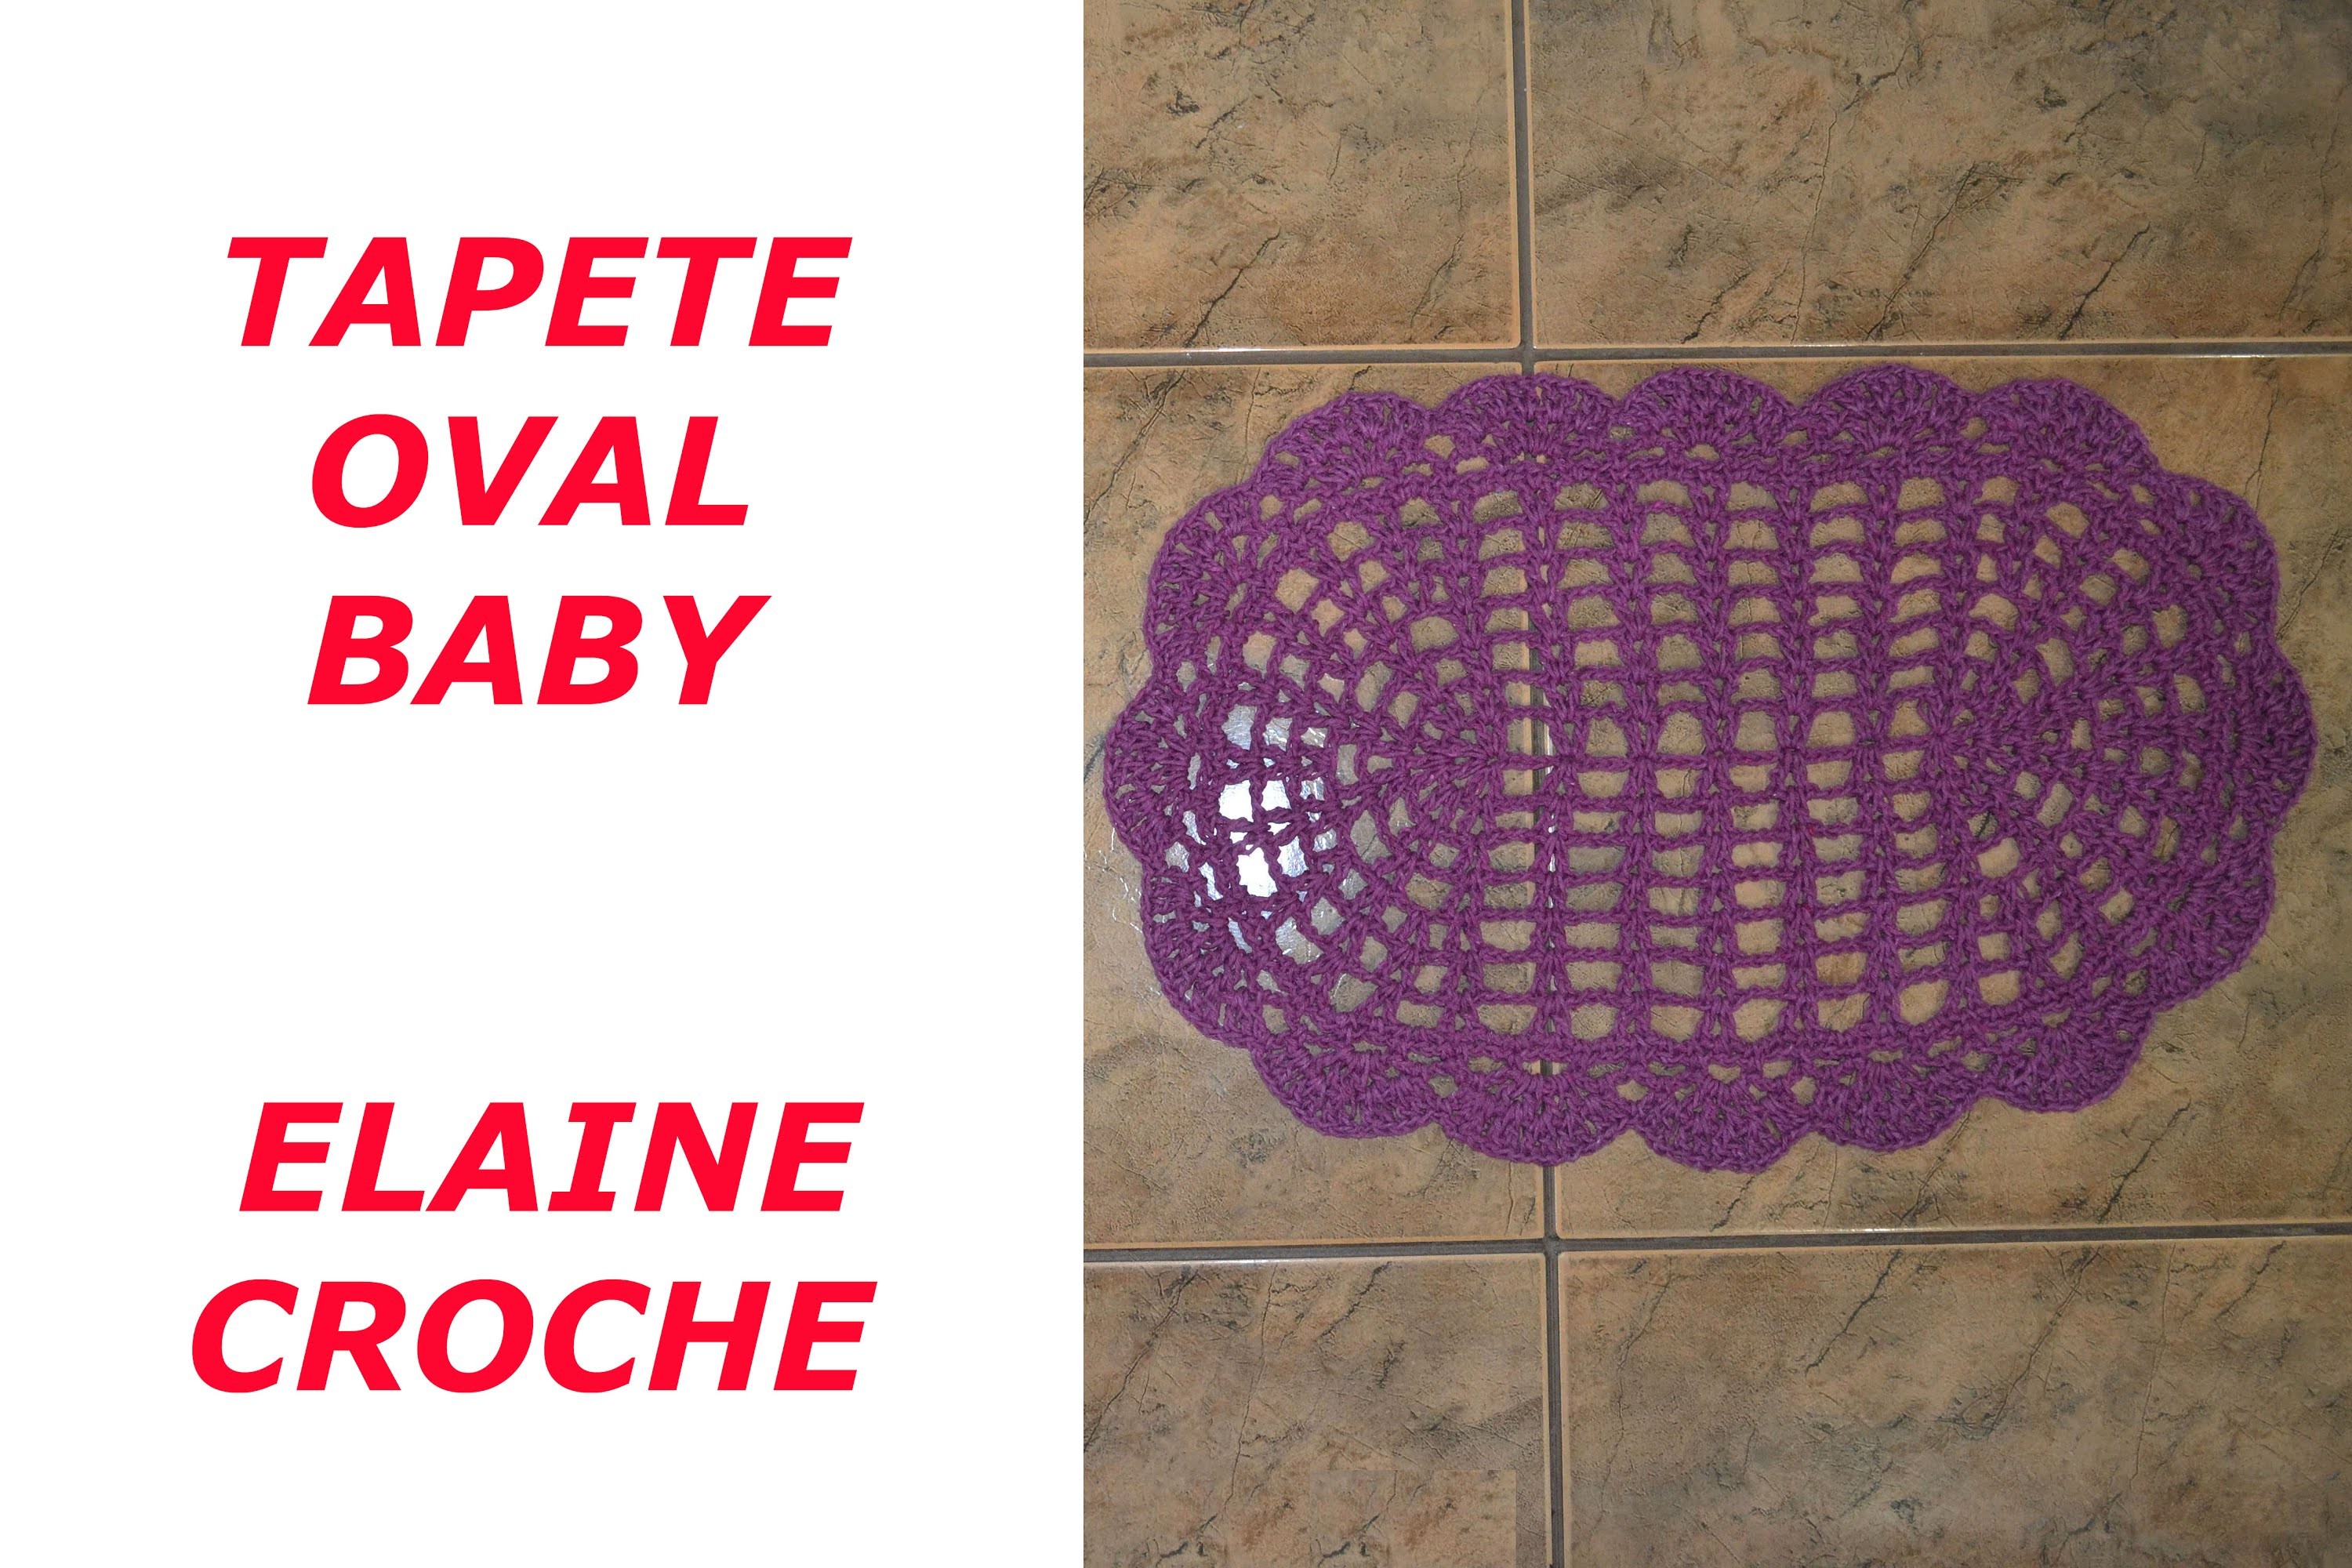 TAPETE OVAL BABY CROCHE - ELAINE CROCHE